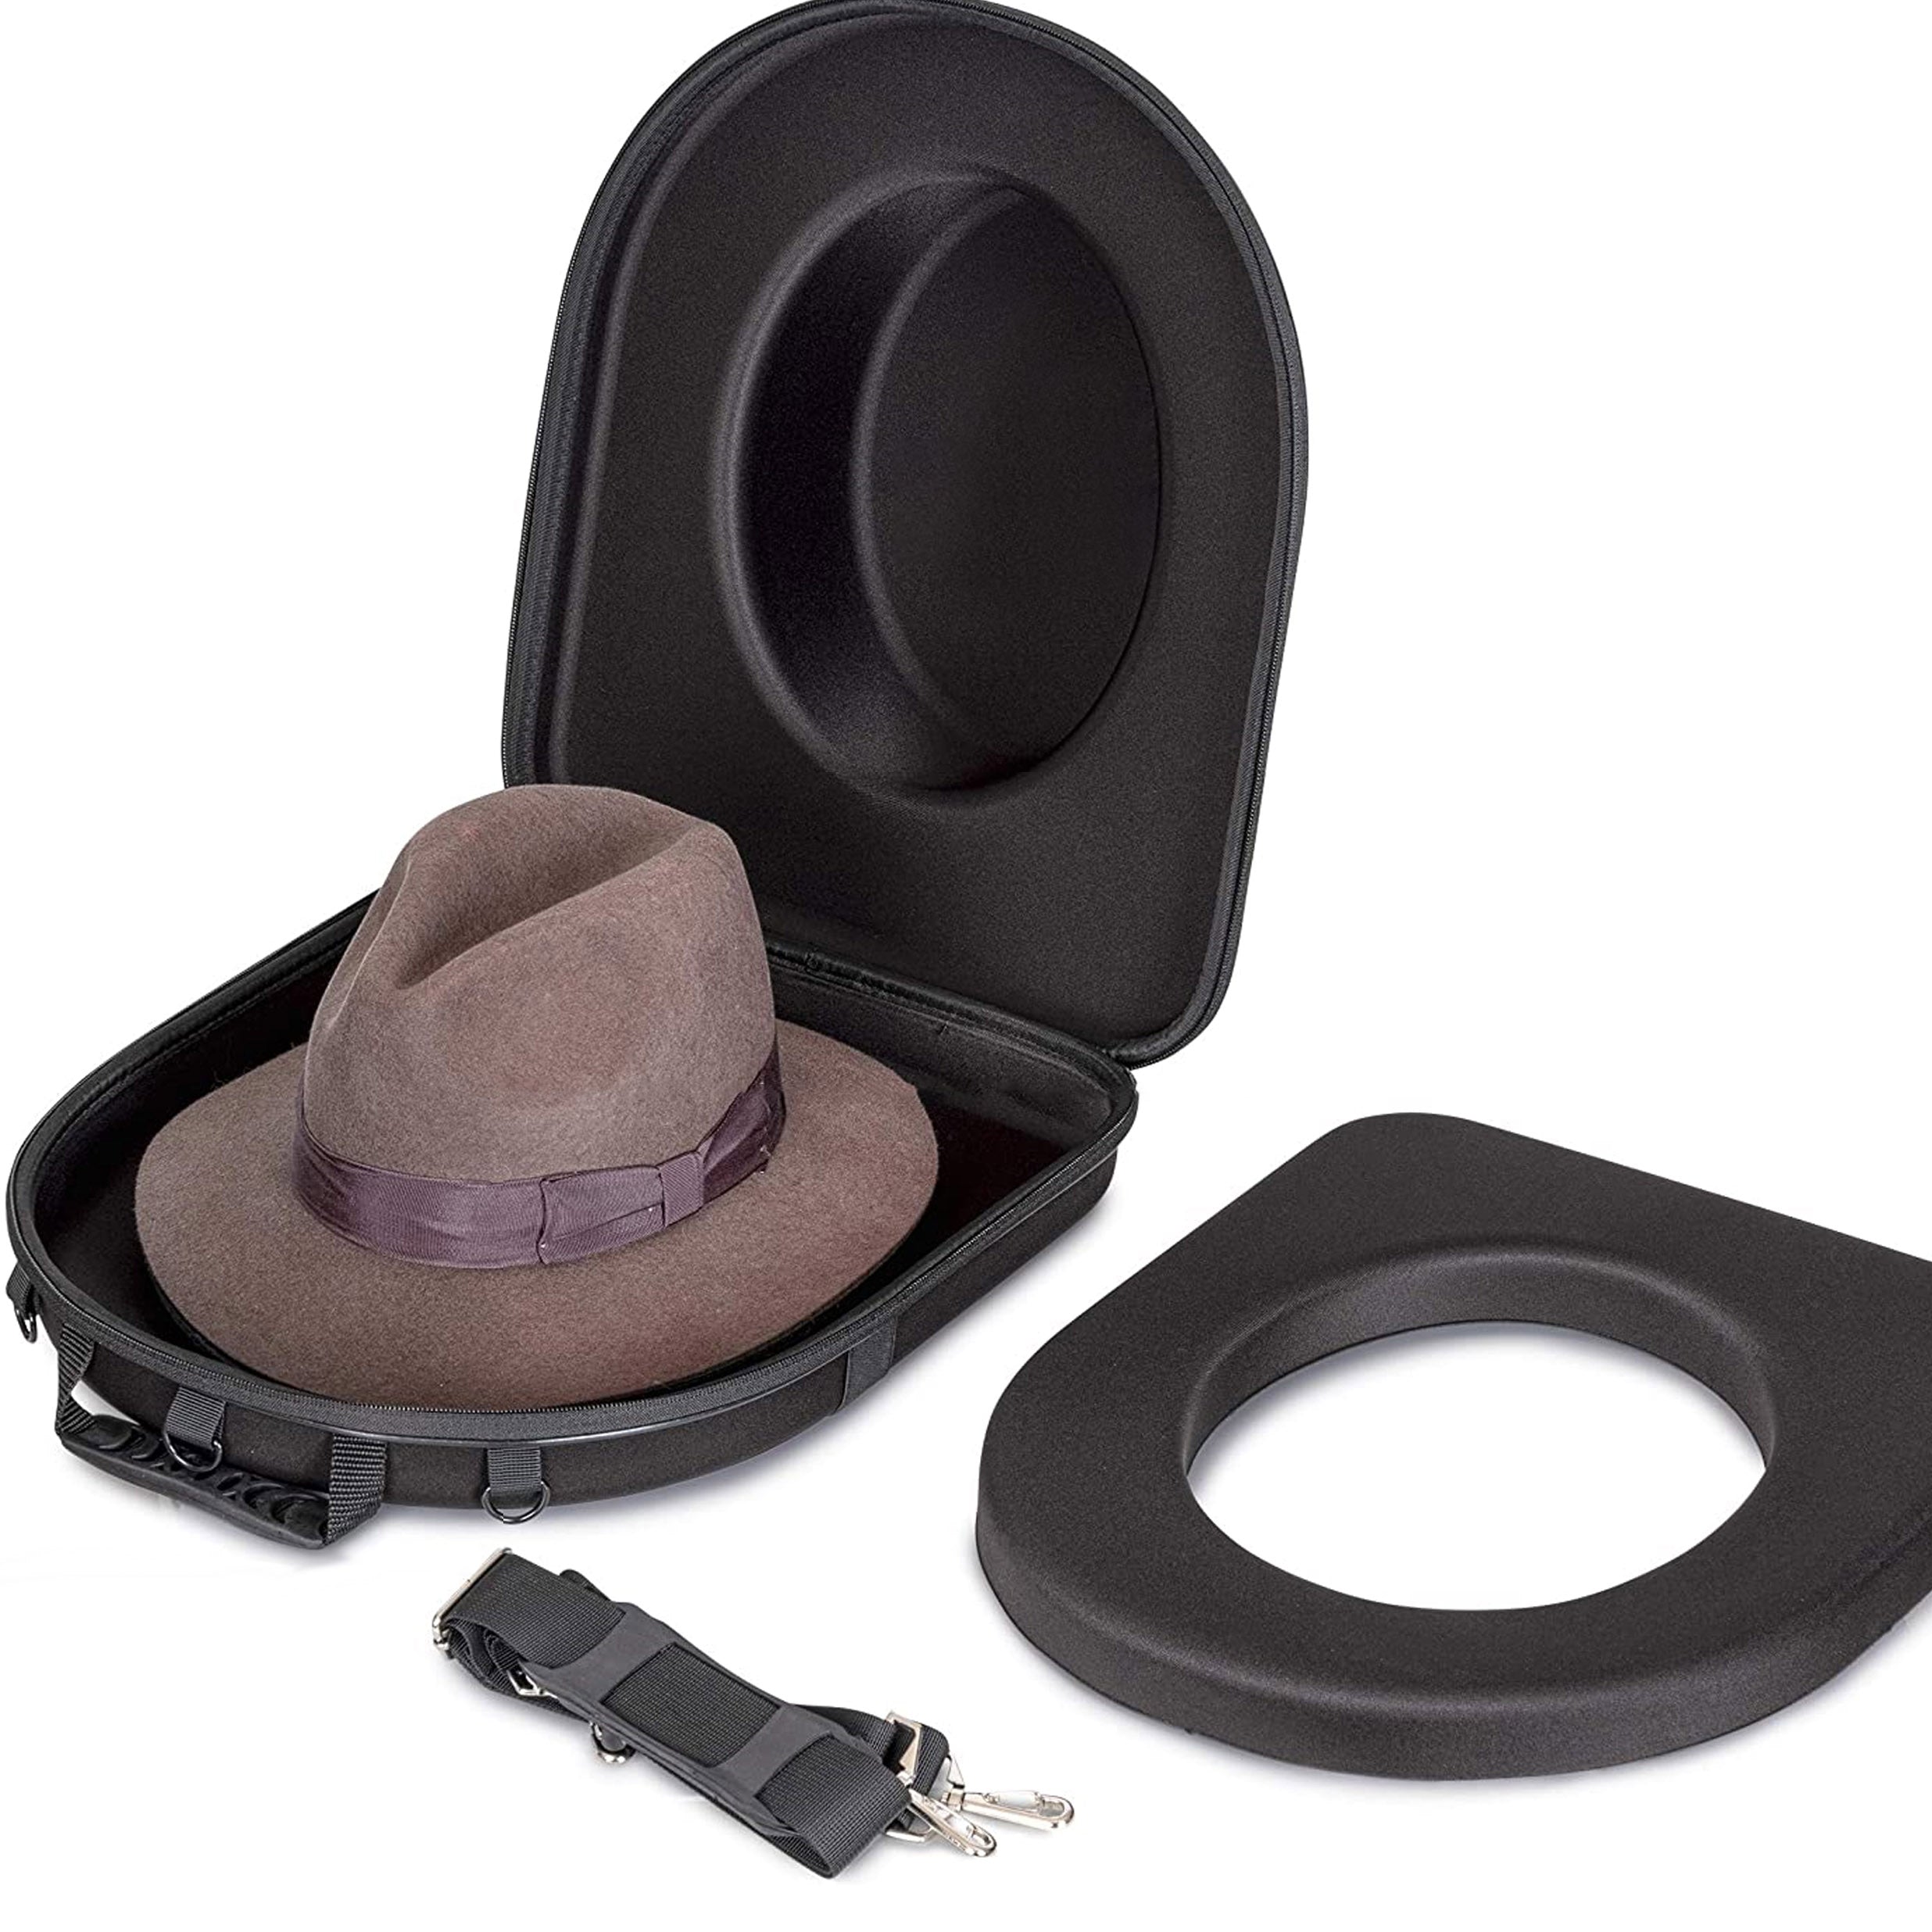 Travel Hat Carrier Case